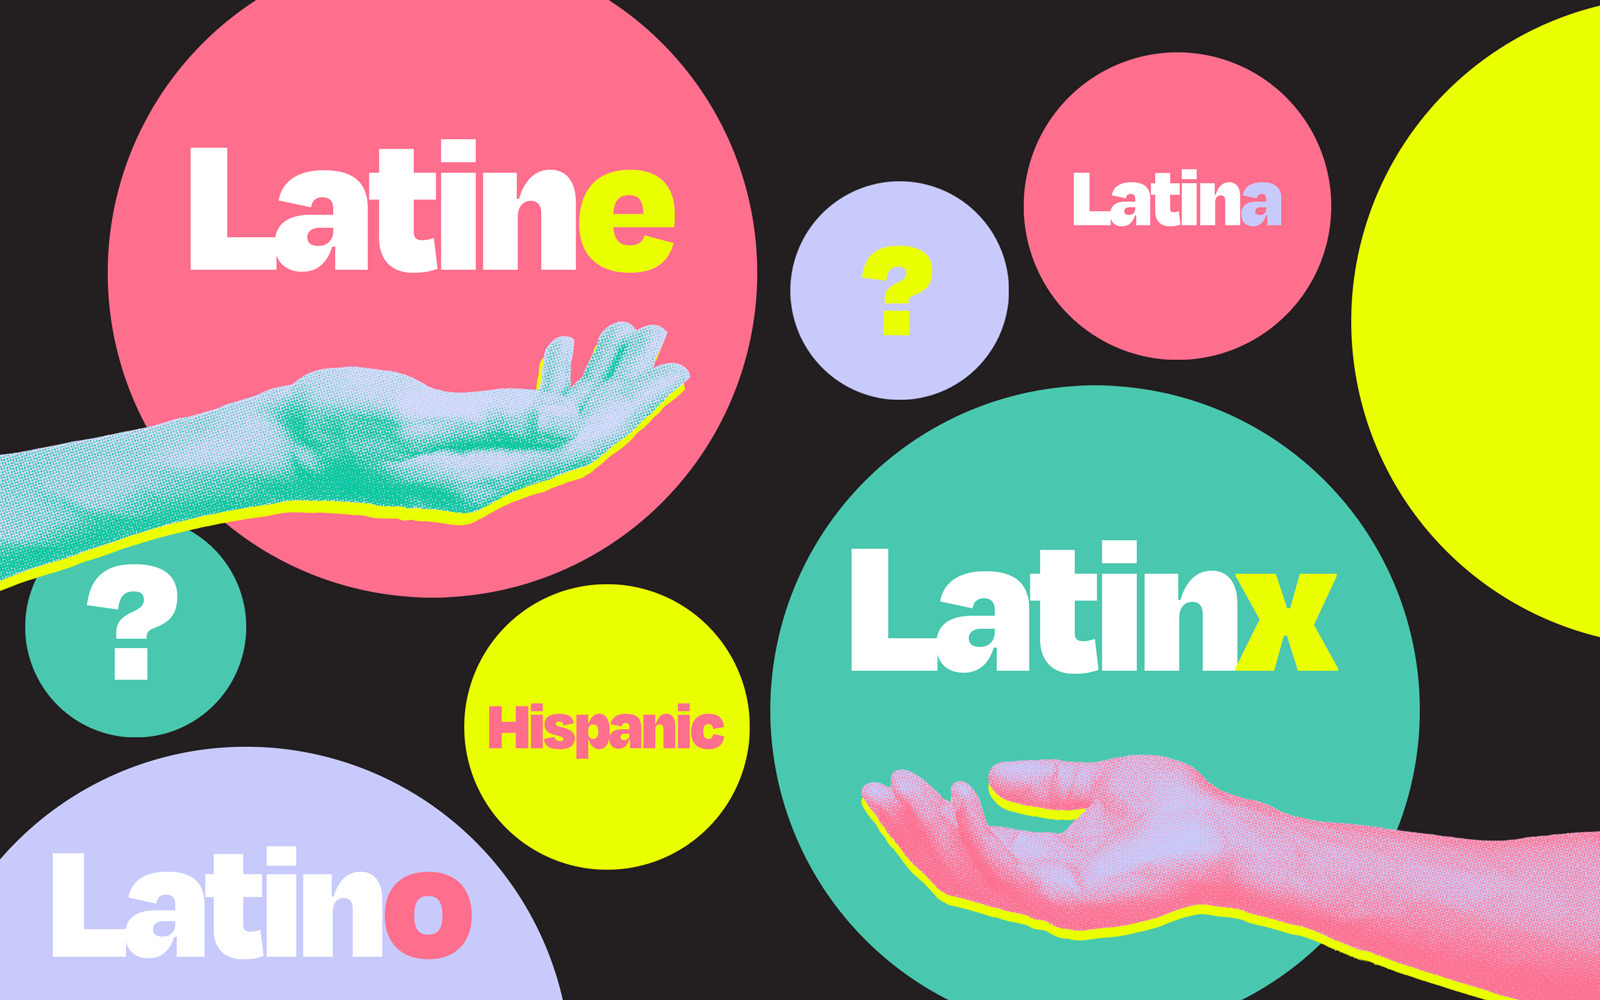 “Latinx”: Pronouns, language, and gender.